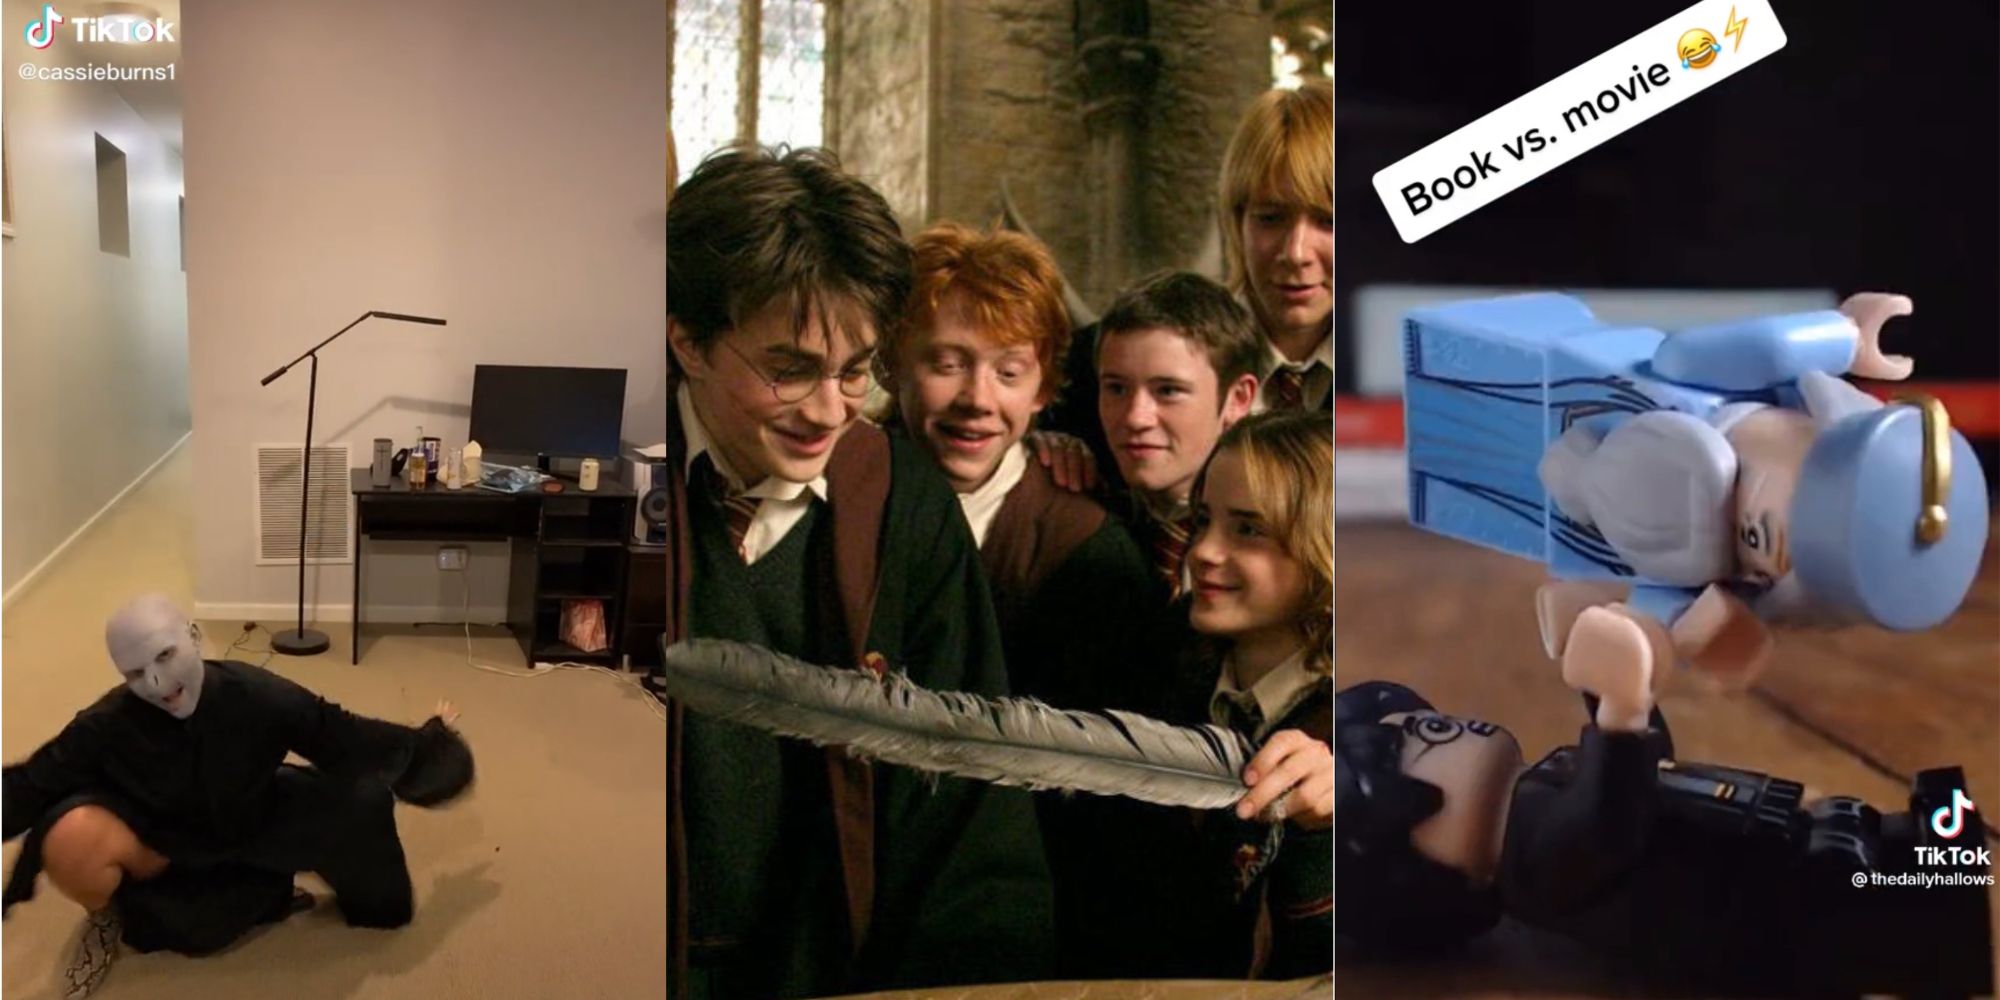 Harry Potter: 10 Hilarious Avada Kedavra Memes That Will Kill You